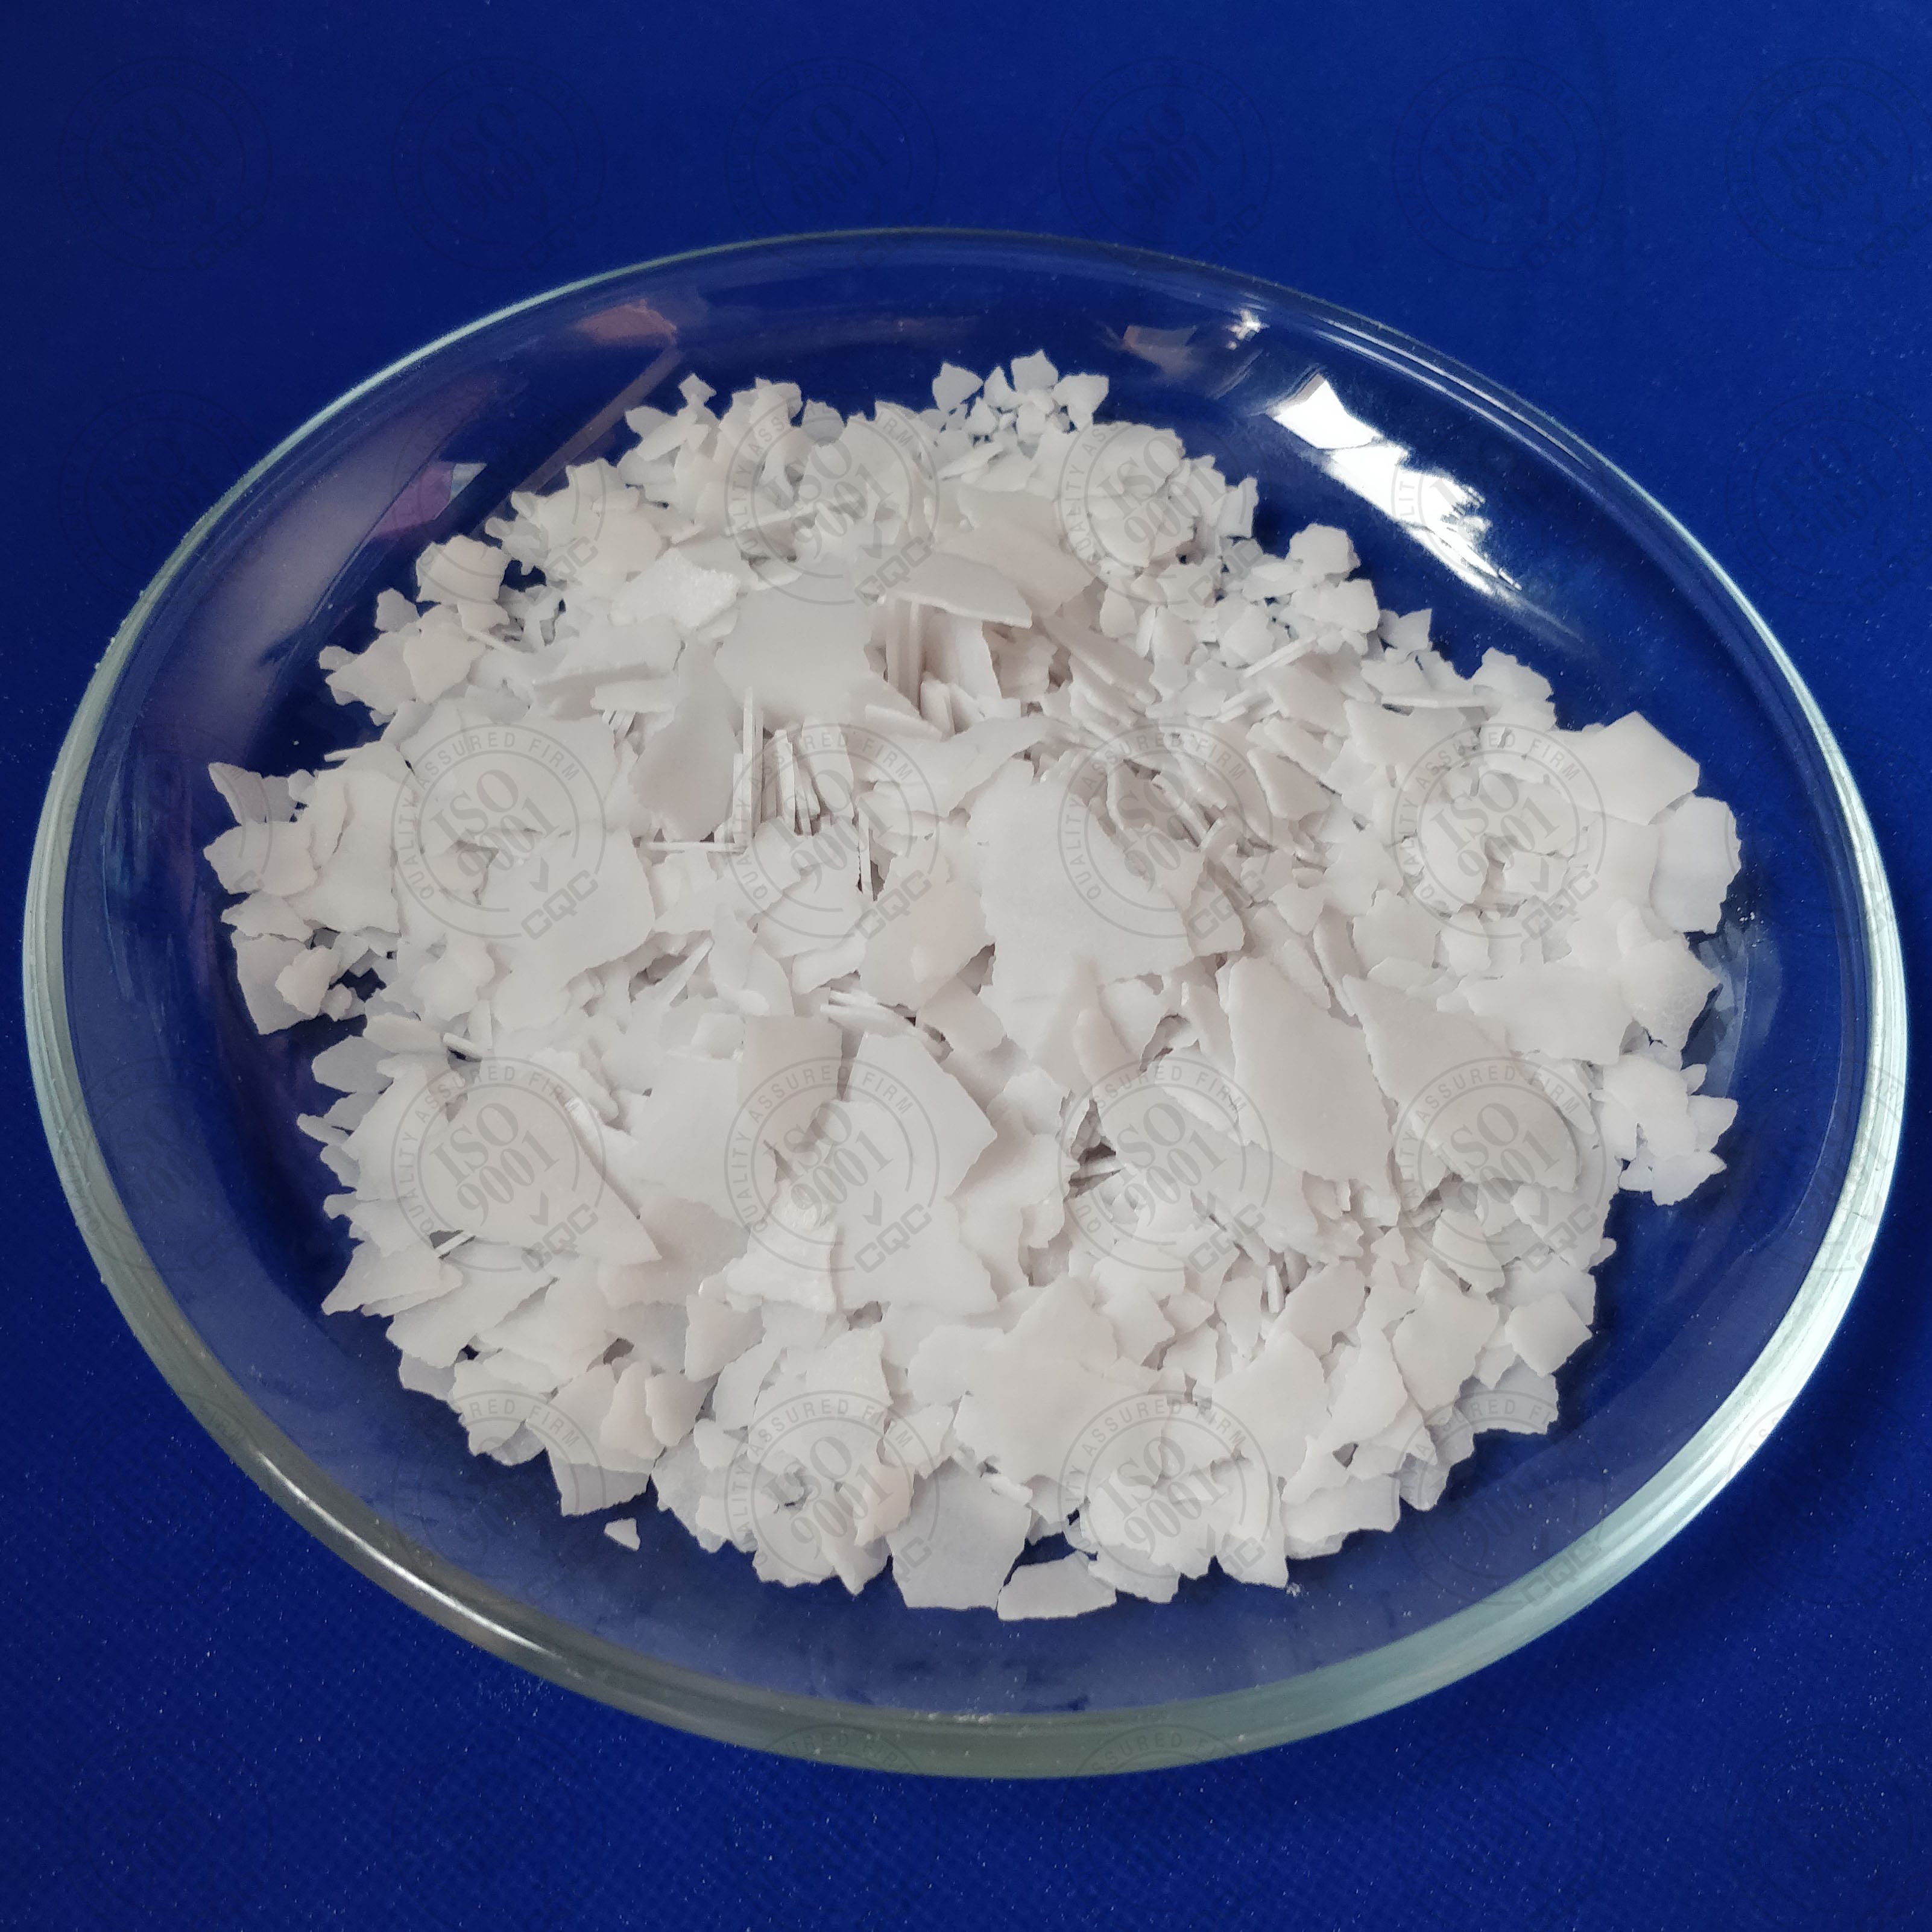 Potassium hydroxide in soft soaps